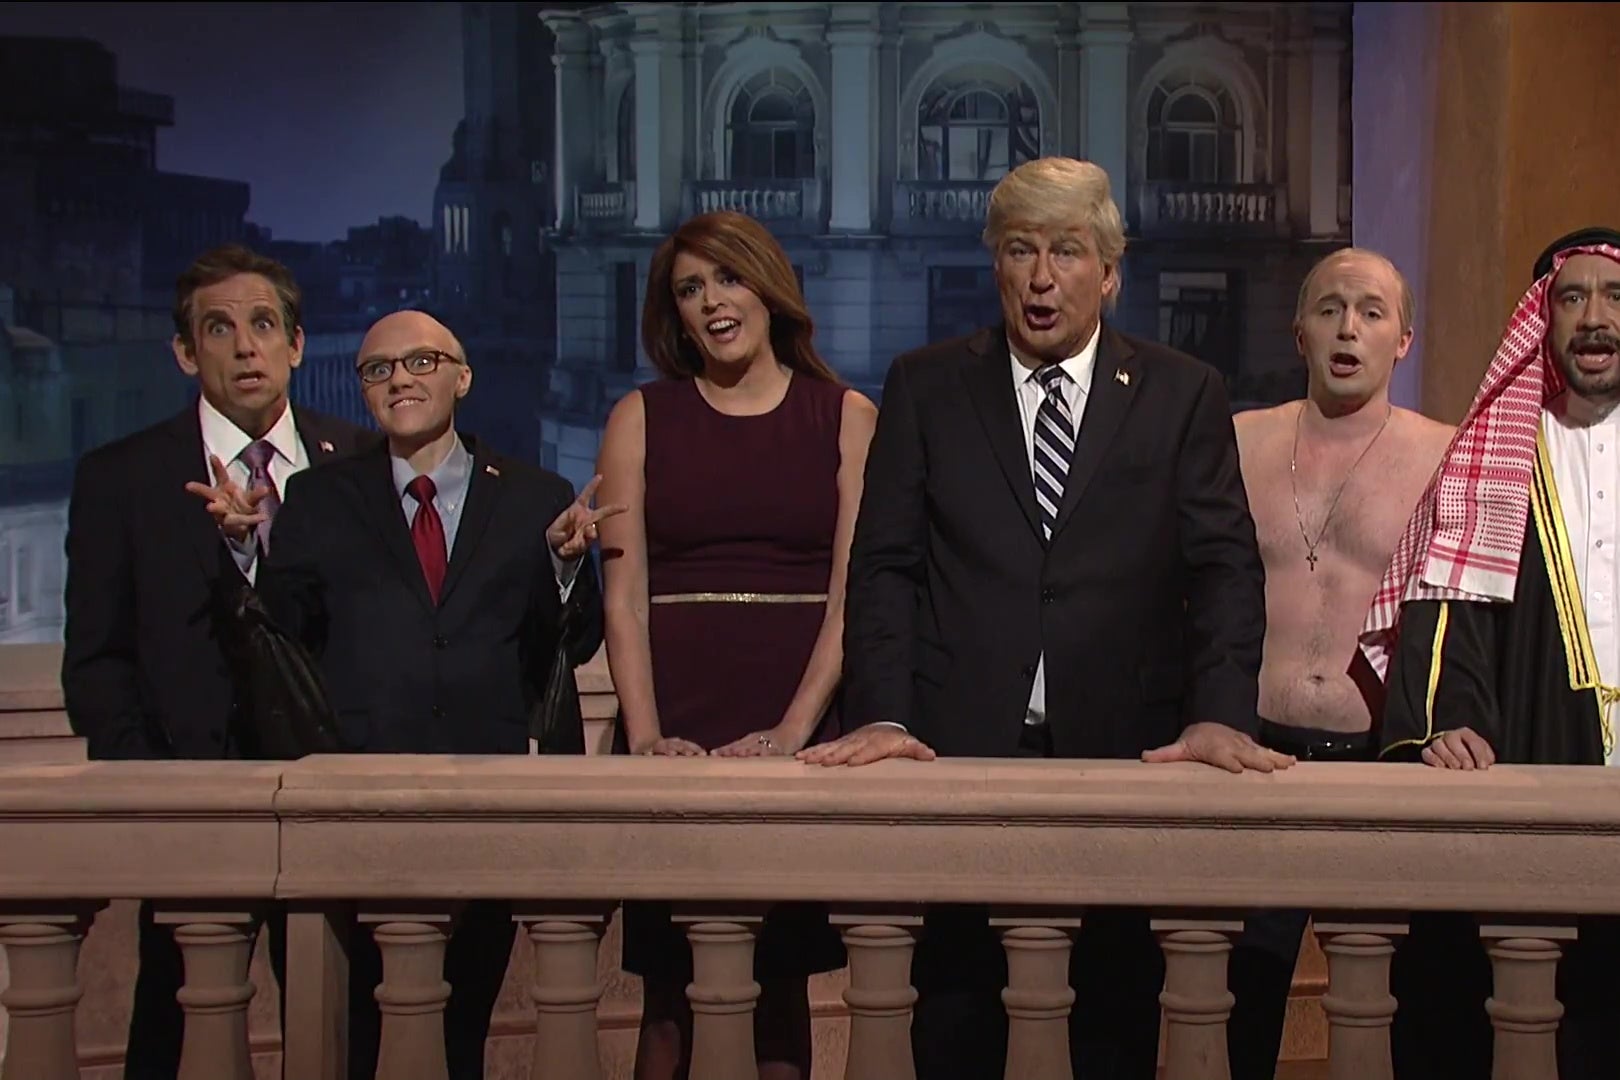 Ben Stiller, Kate McKinnon, Cecily Strong, Alec Baldwin, Beck Bennett, and Fred Armisen dressed up as various Trump administration figures.